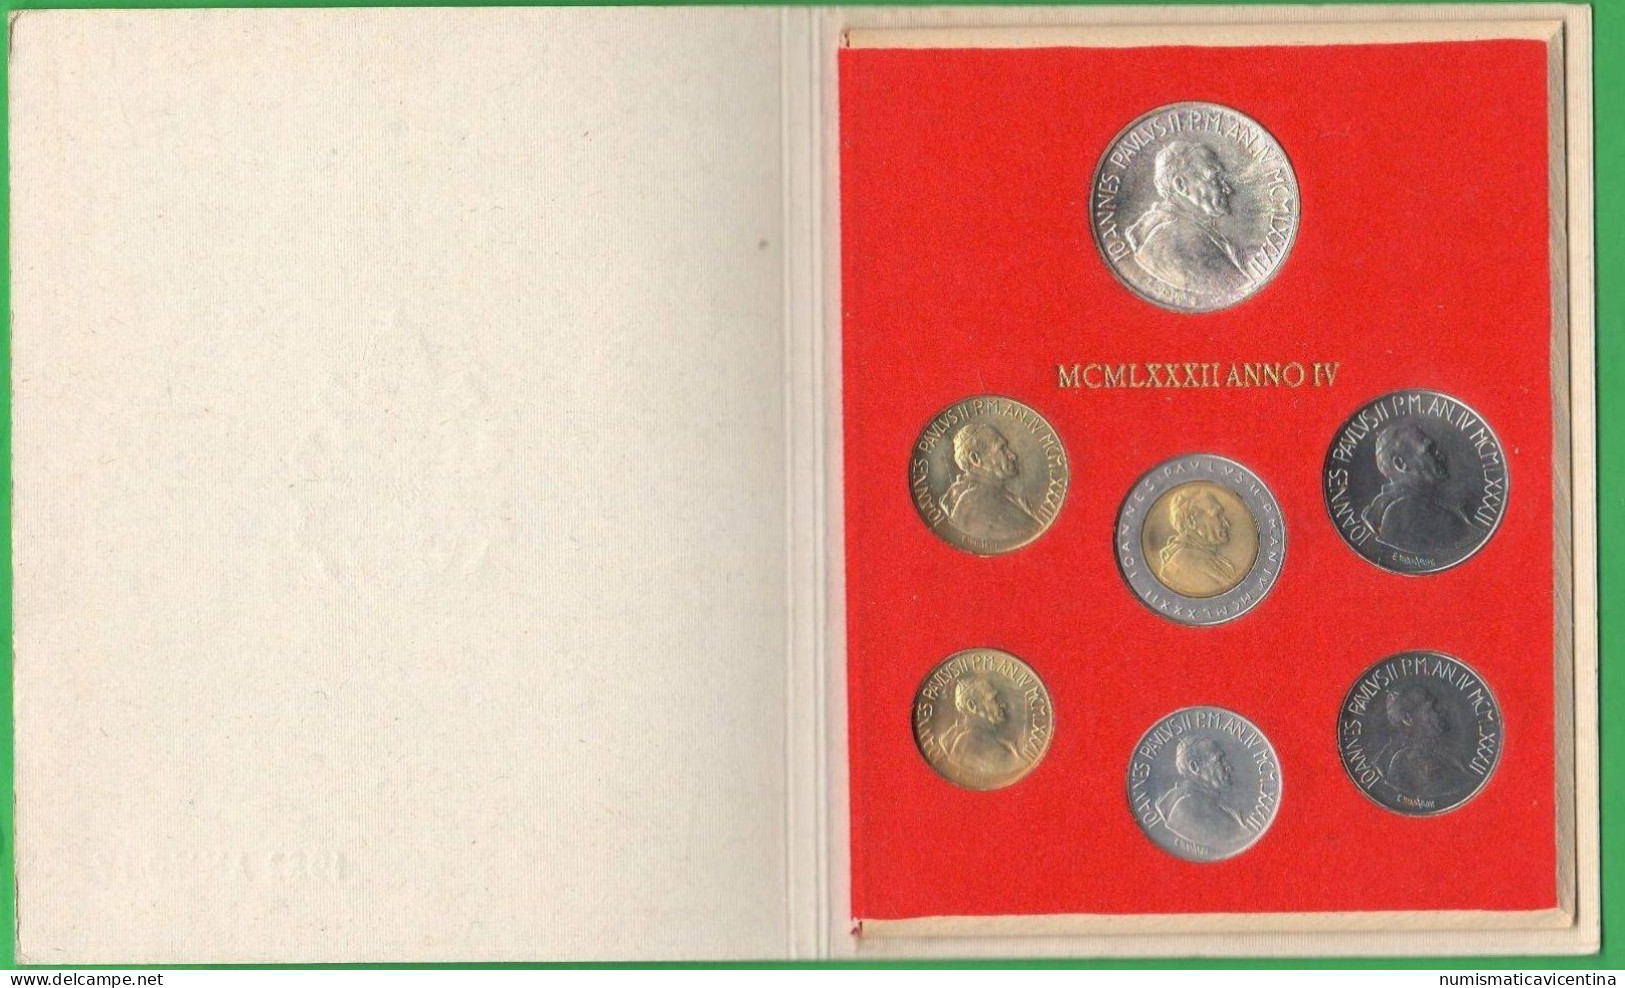 Vaticano Serie 1982 Wojtyla Vatikan City Anno IV° UNC Divisionale 7 Valori Set Coin Papal City - Vaticano (Ciudad Del)